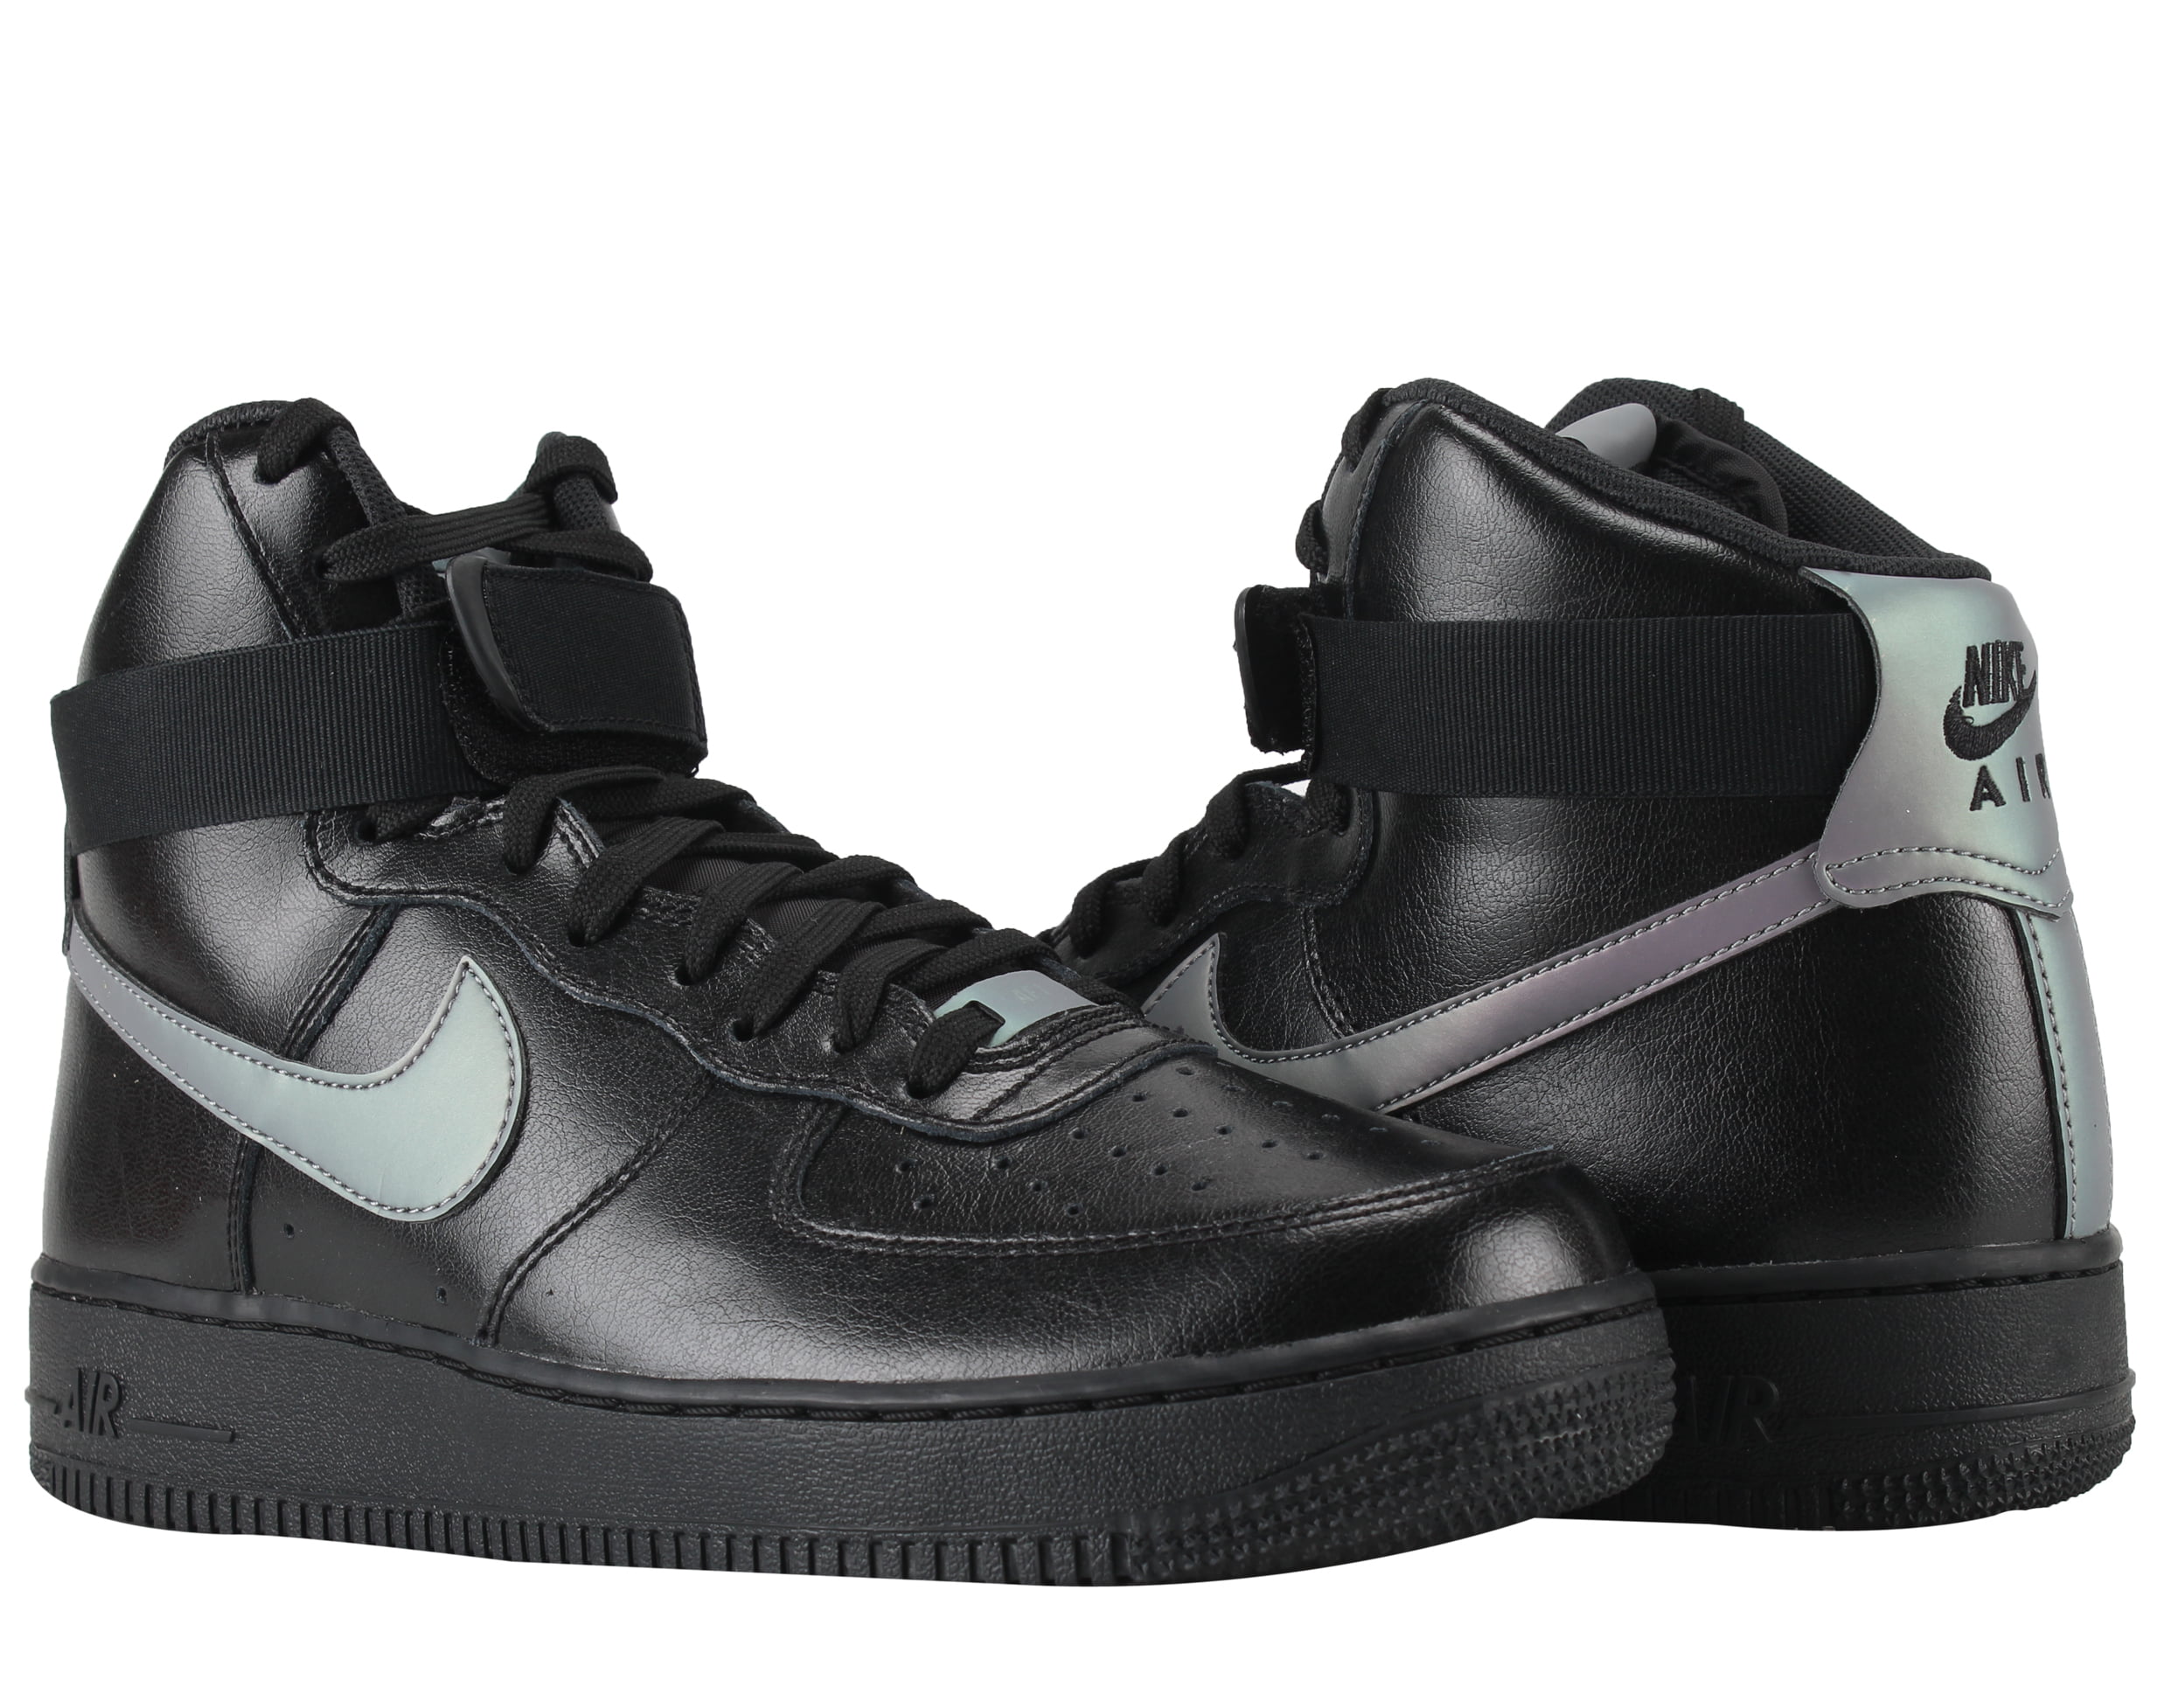 Nike Air Force 1 High '07 LV8 Sport Men's Shoes Black/Mettalic